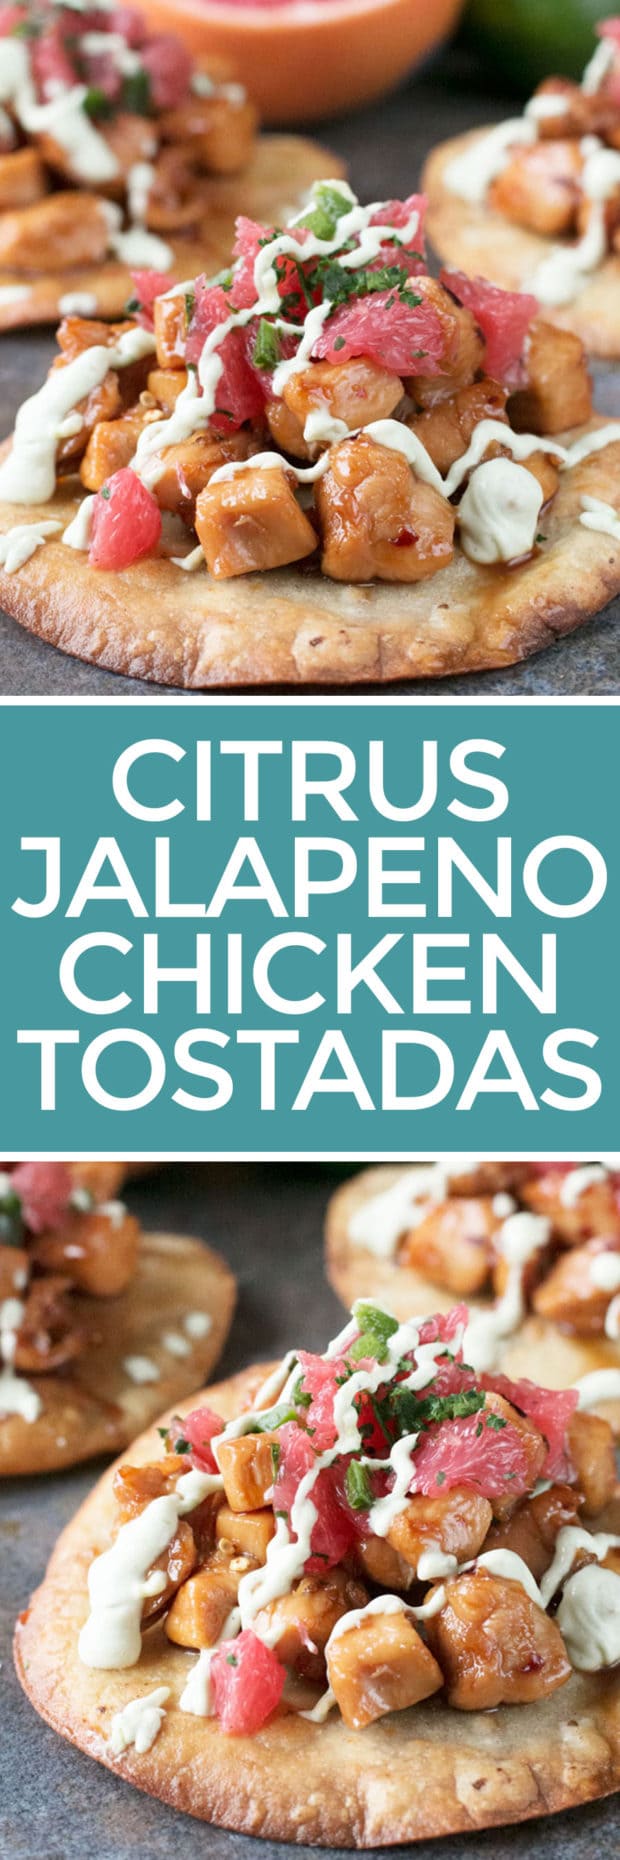 Citrus Jalapeno Chicken Tostadas | cakenknife.com #dinner #recipe